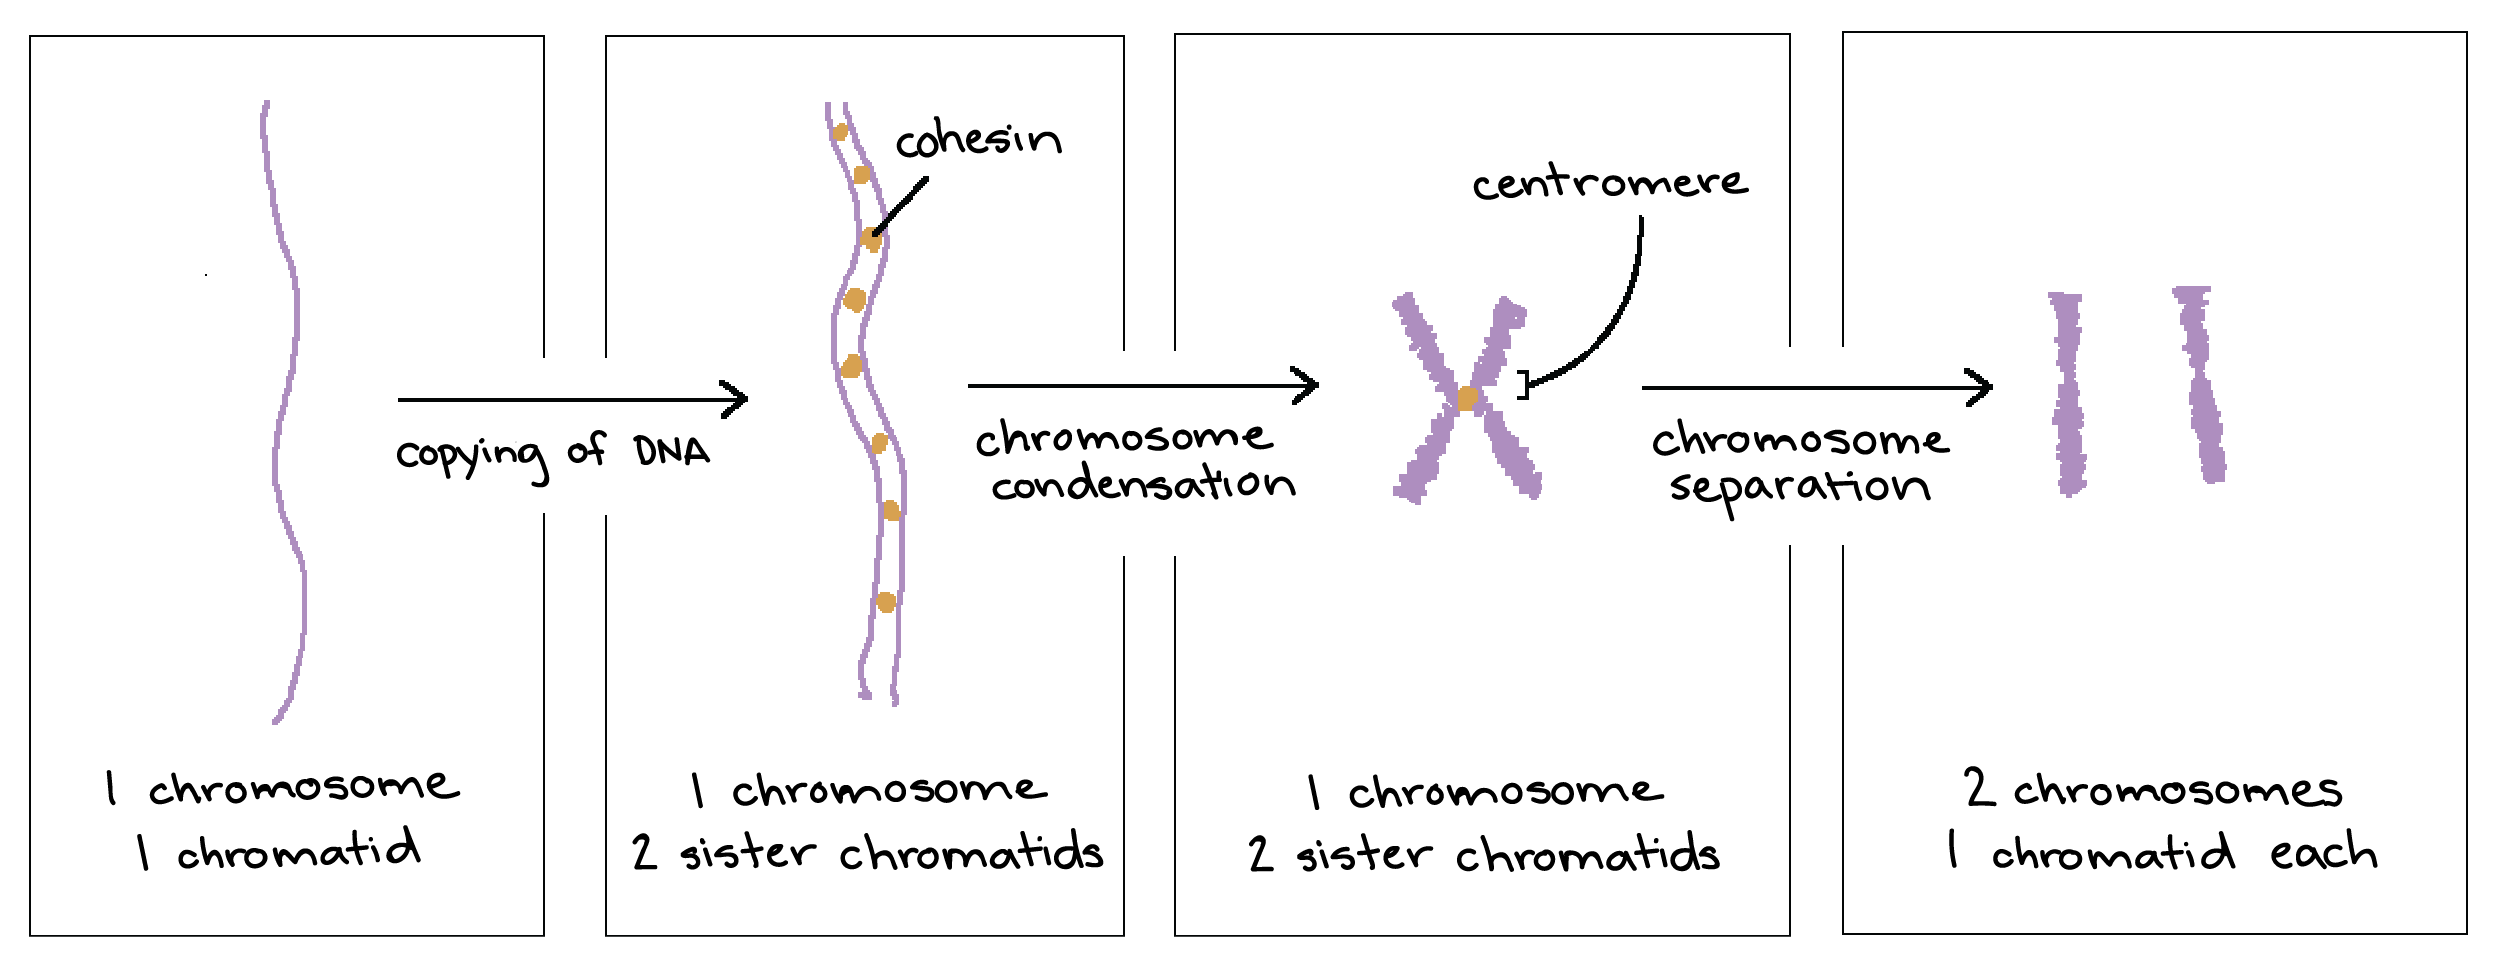 Chromatids and chromosomes